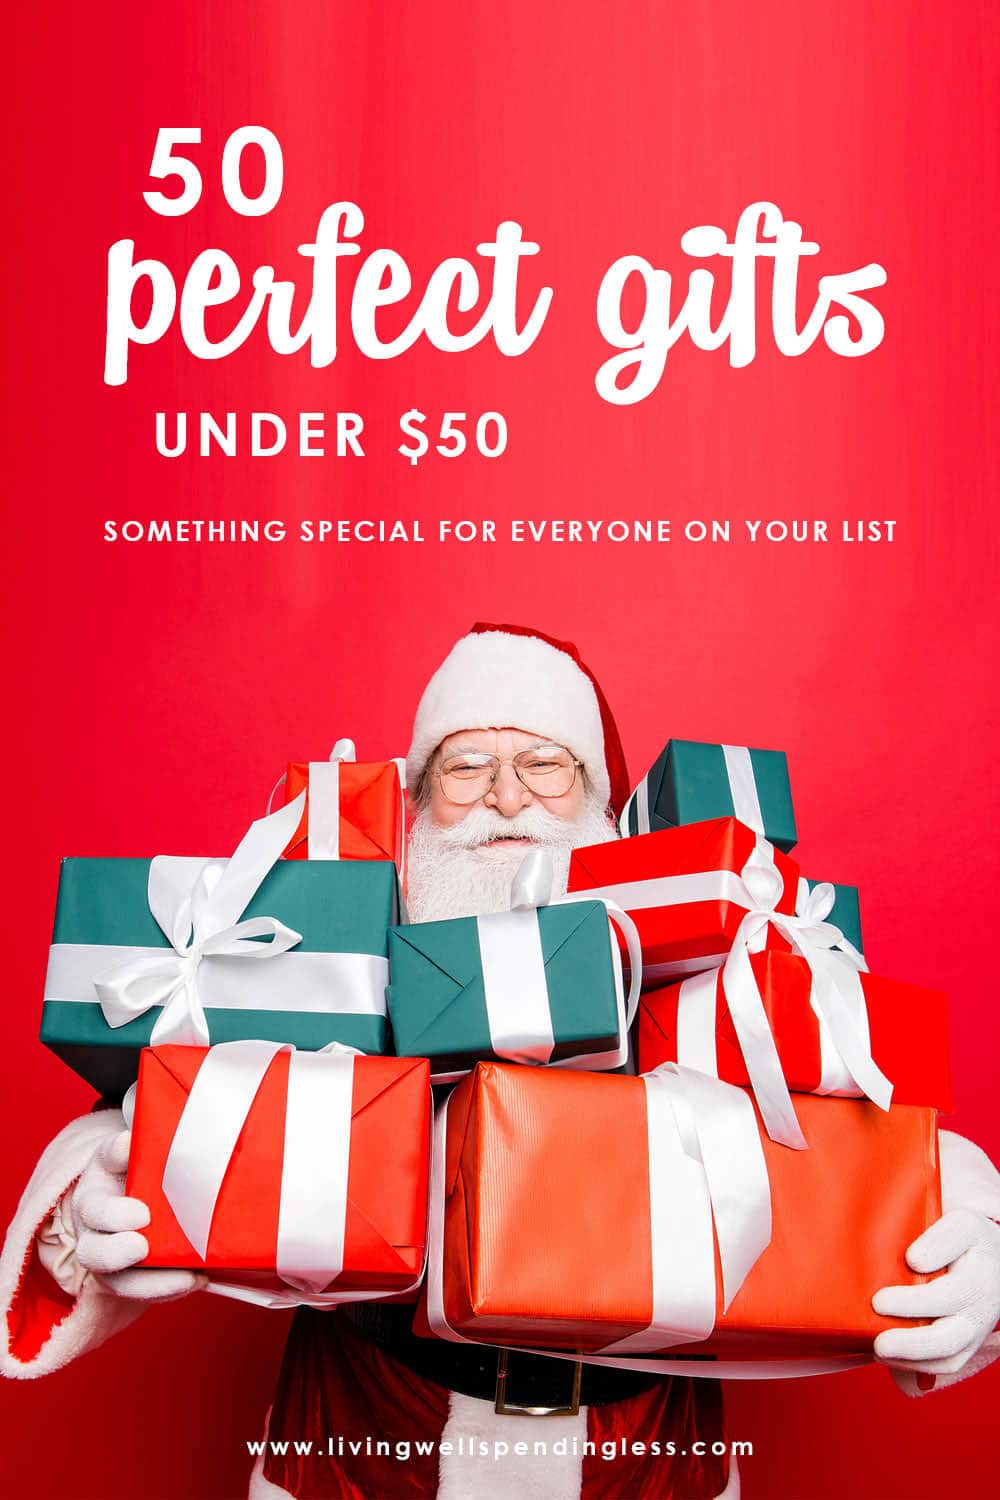 https://www.livingwellspendingless.com/wp-content/uploads/2019/10/50-Perfect-Gifts-Under-50_Vertical.jpg